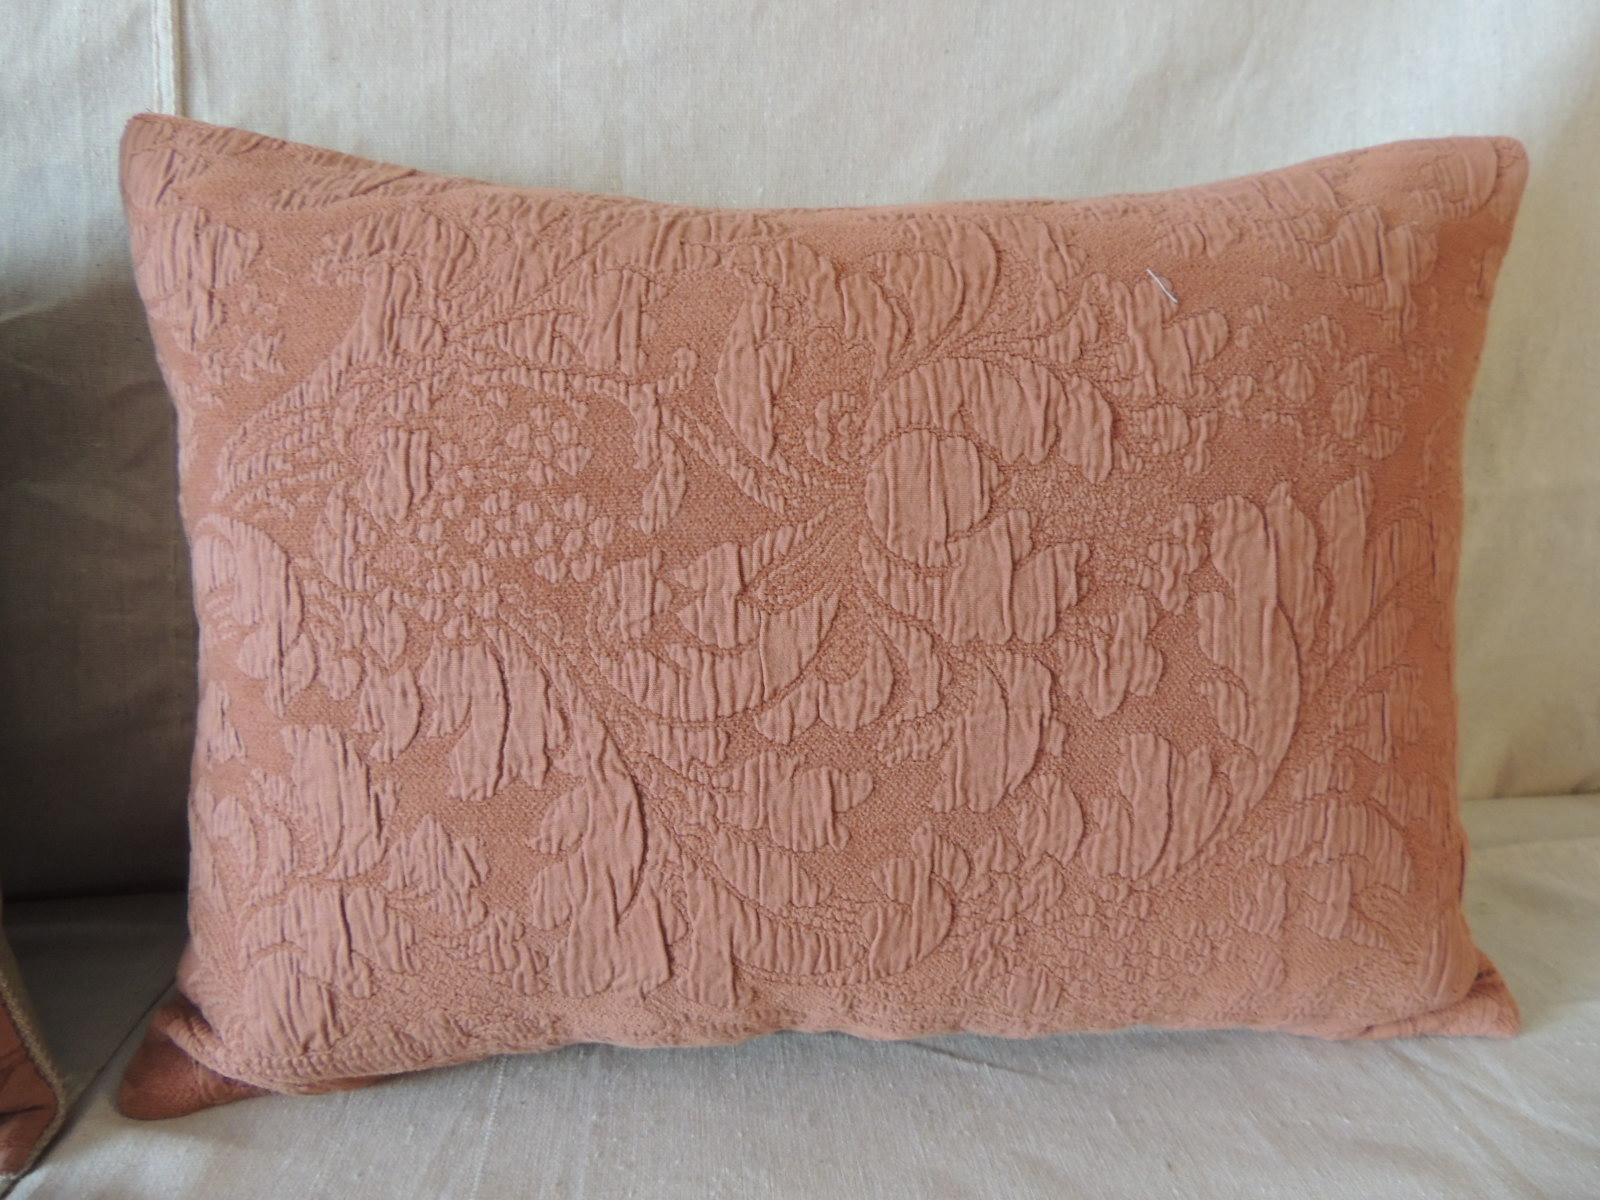 Portuguese Pair of Modern Dusty Pink Tone-on-Tone Matelassé Bolster Decorative Pillows